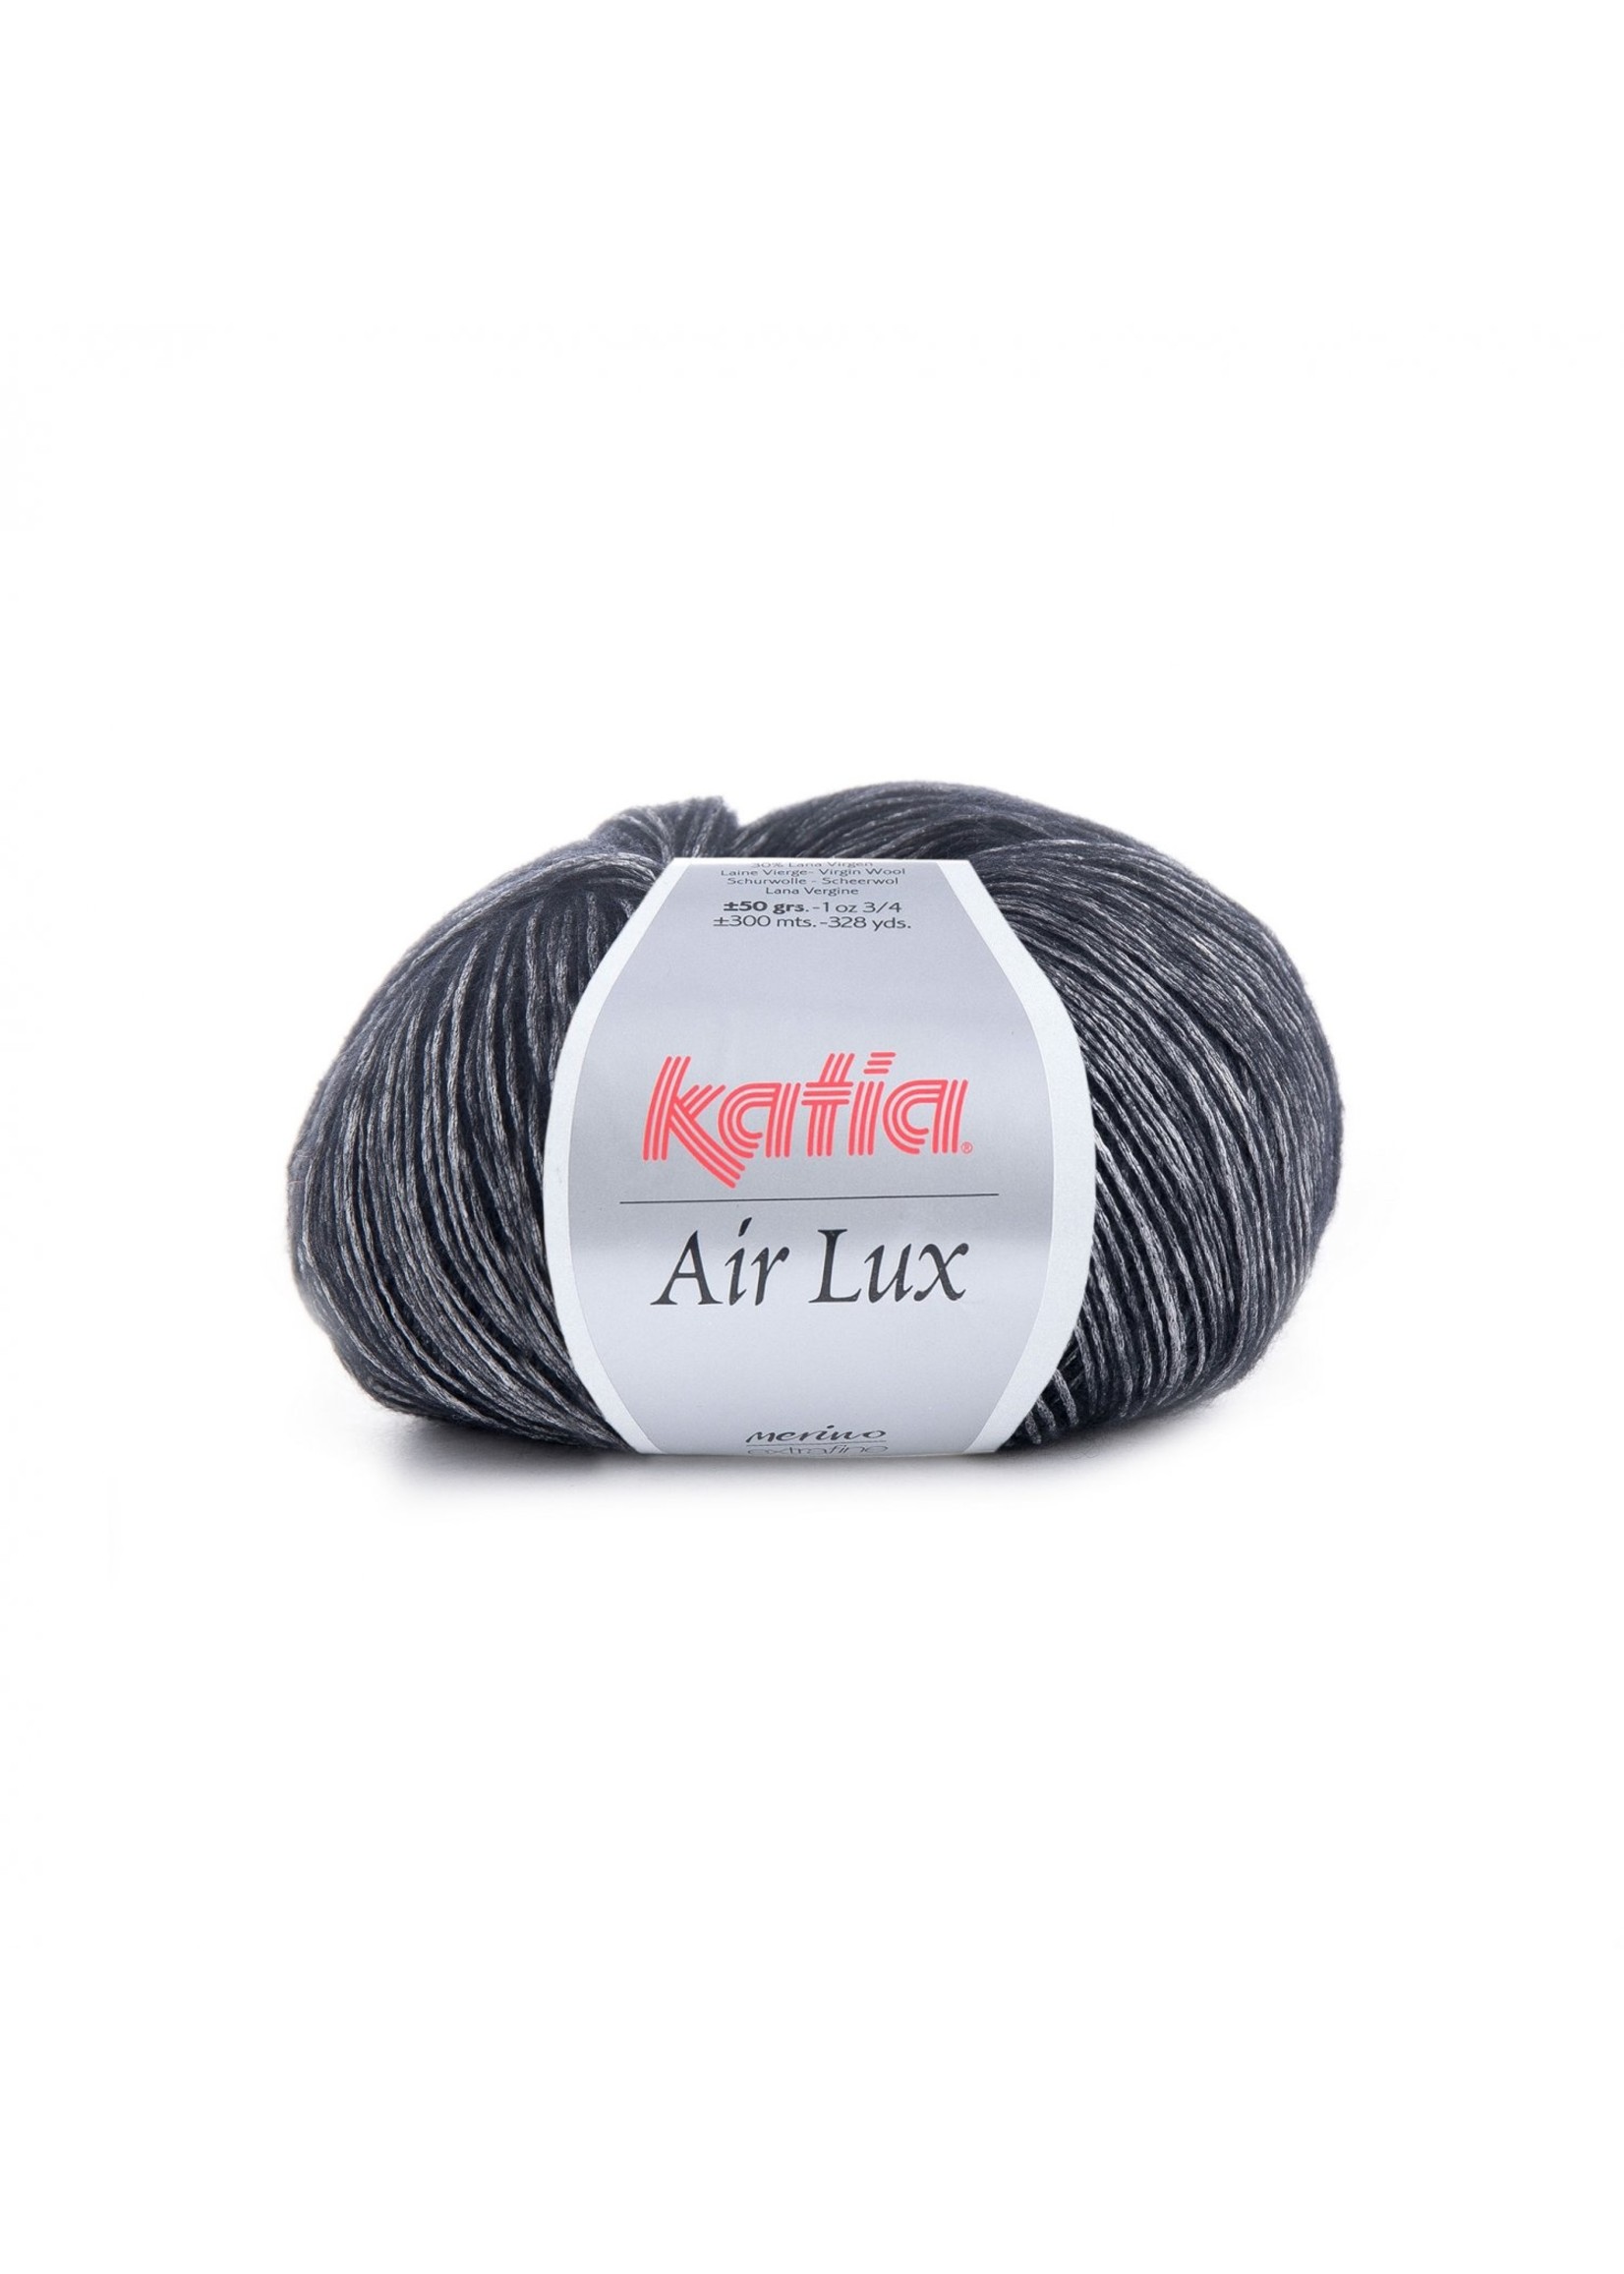 Katia breipakket  sjaal Air lux